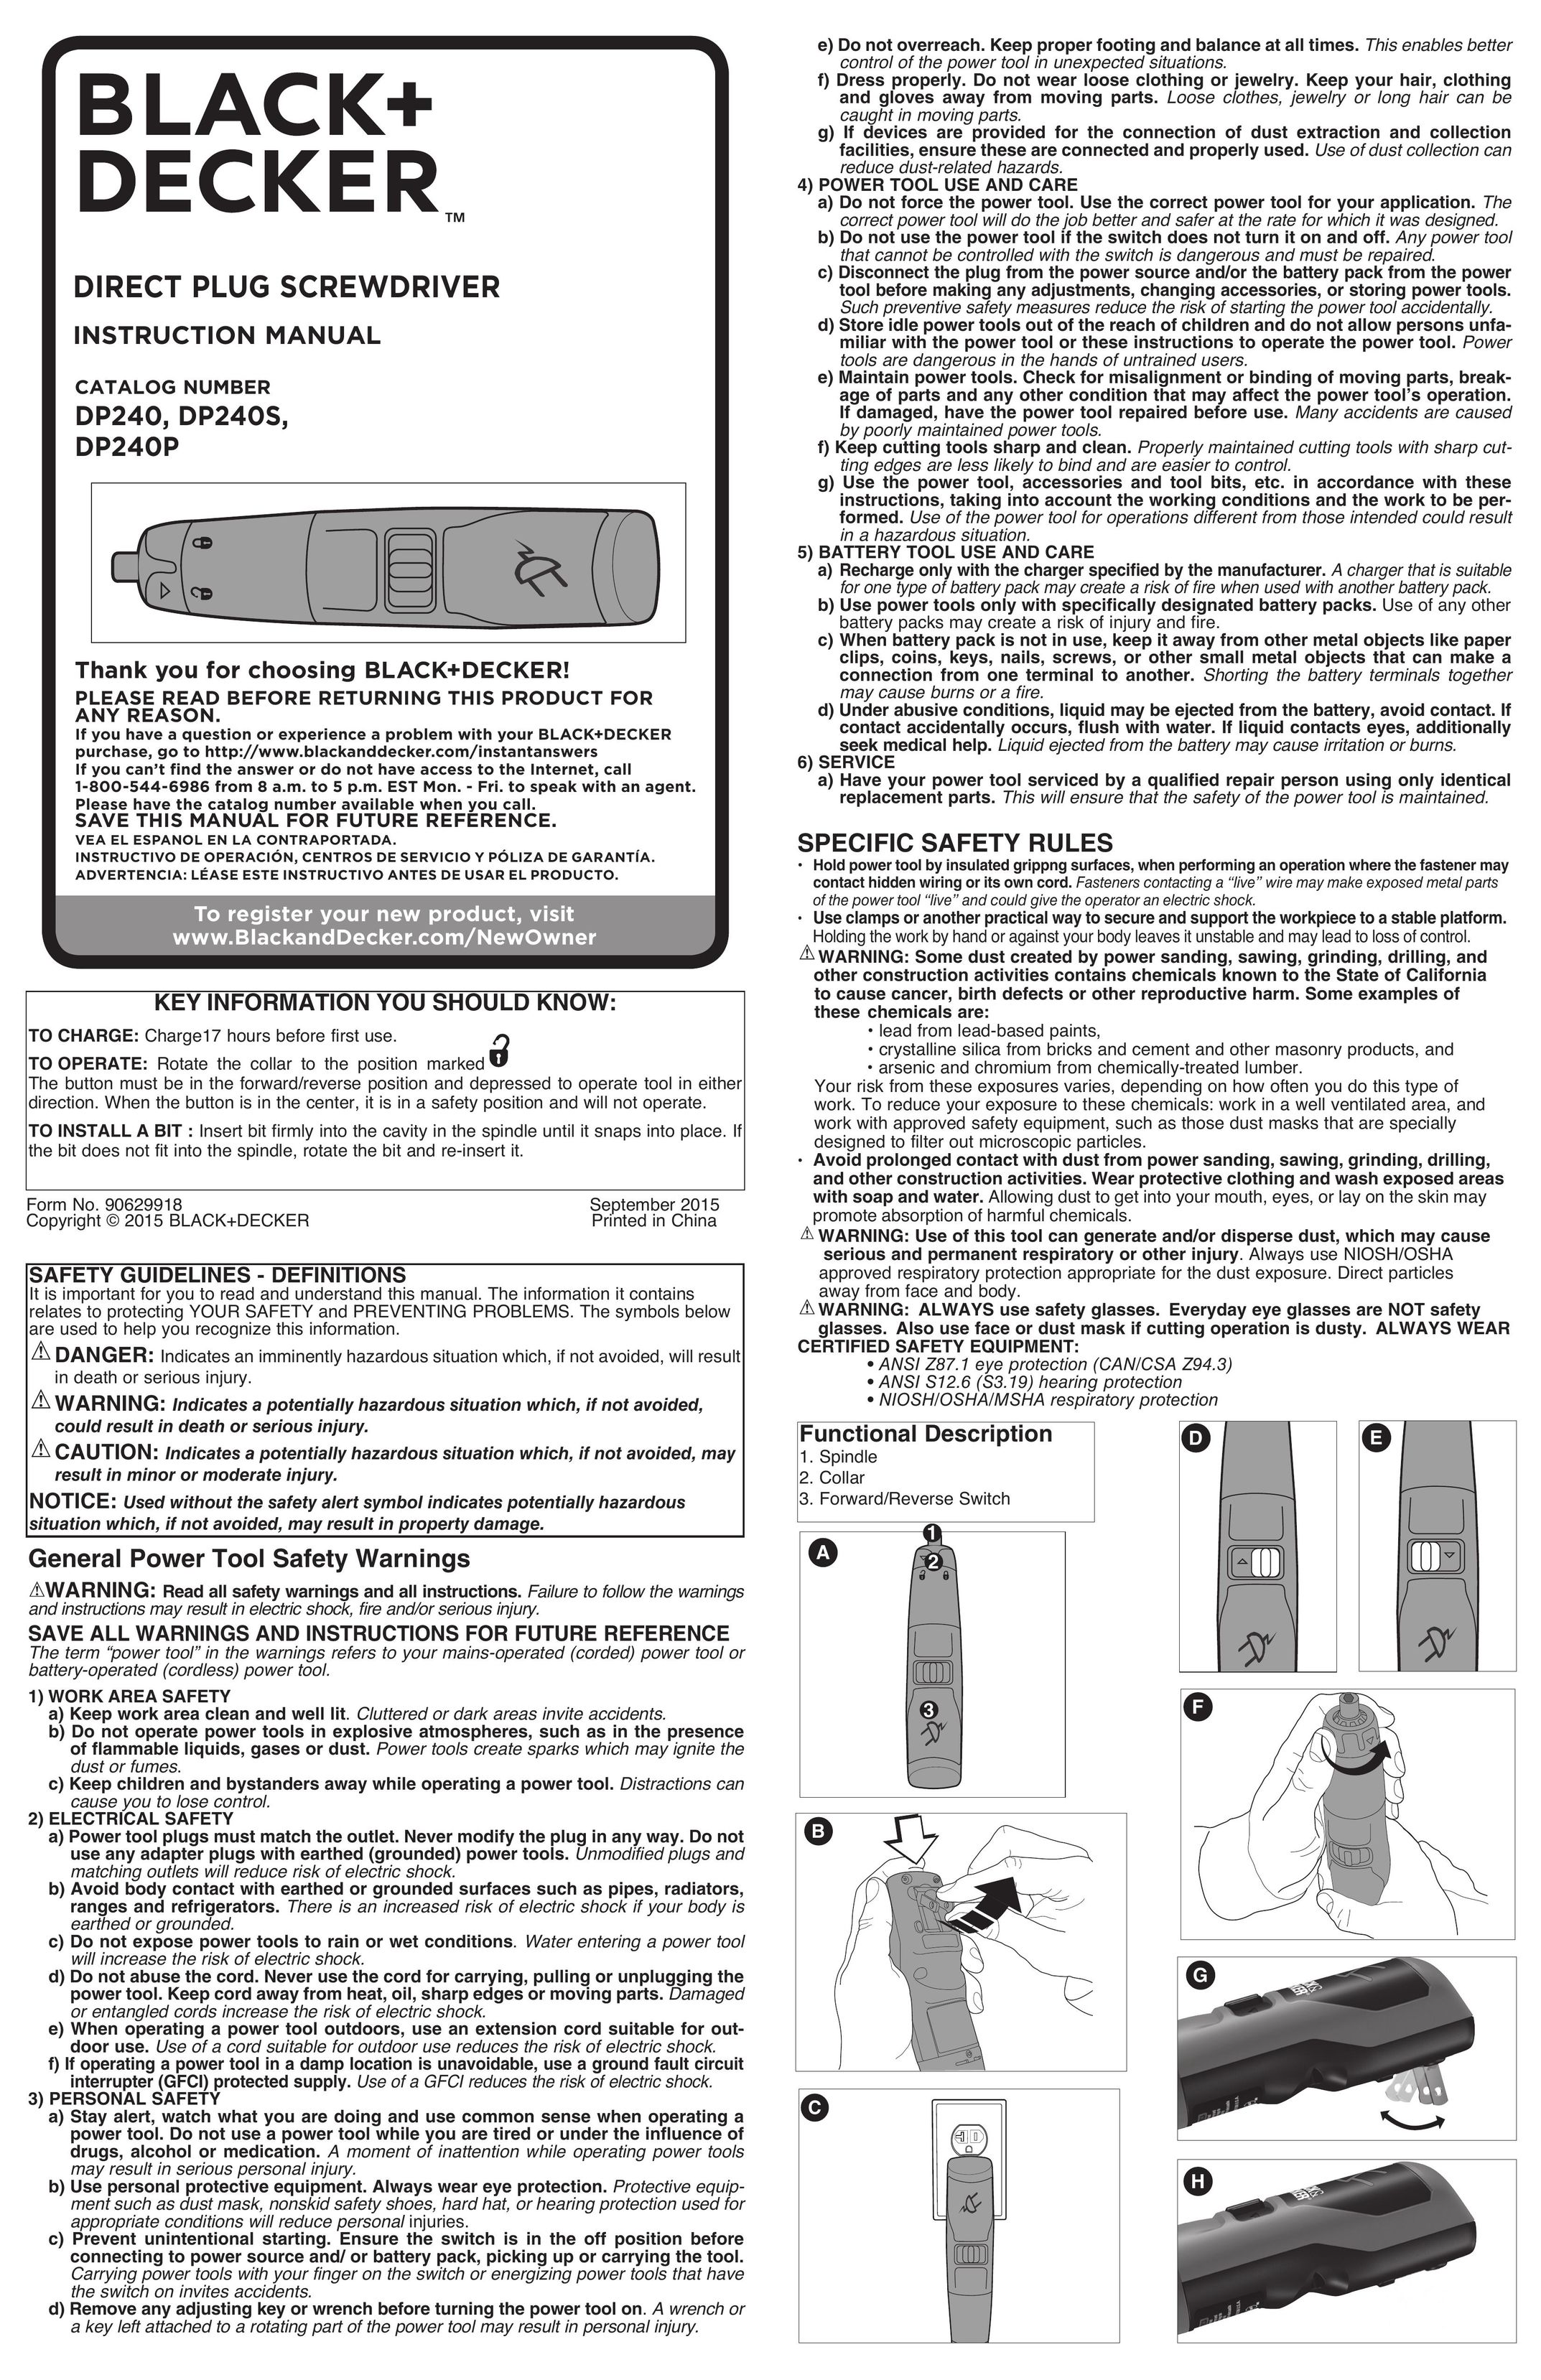 Black & Decker DP240 Power Screwdriver User Manual